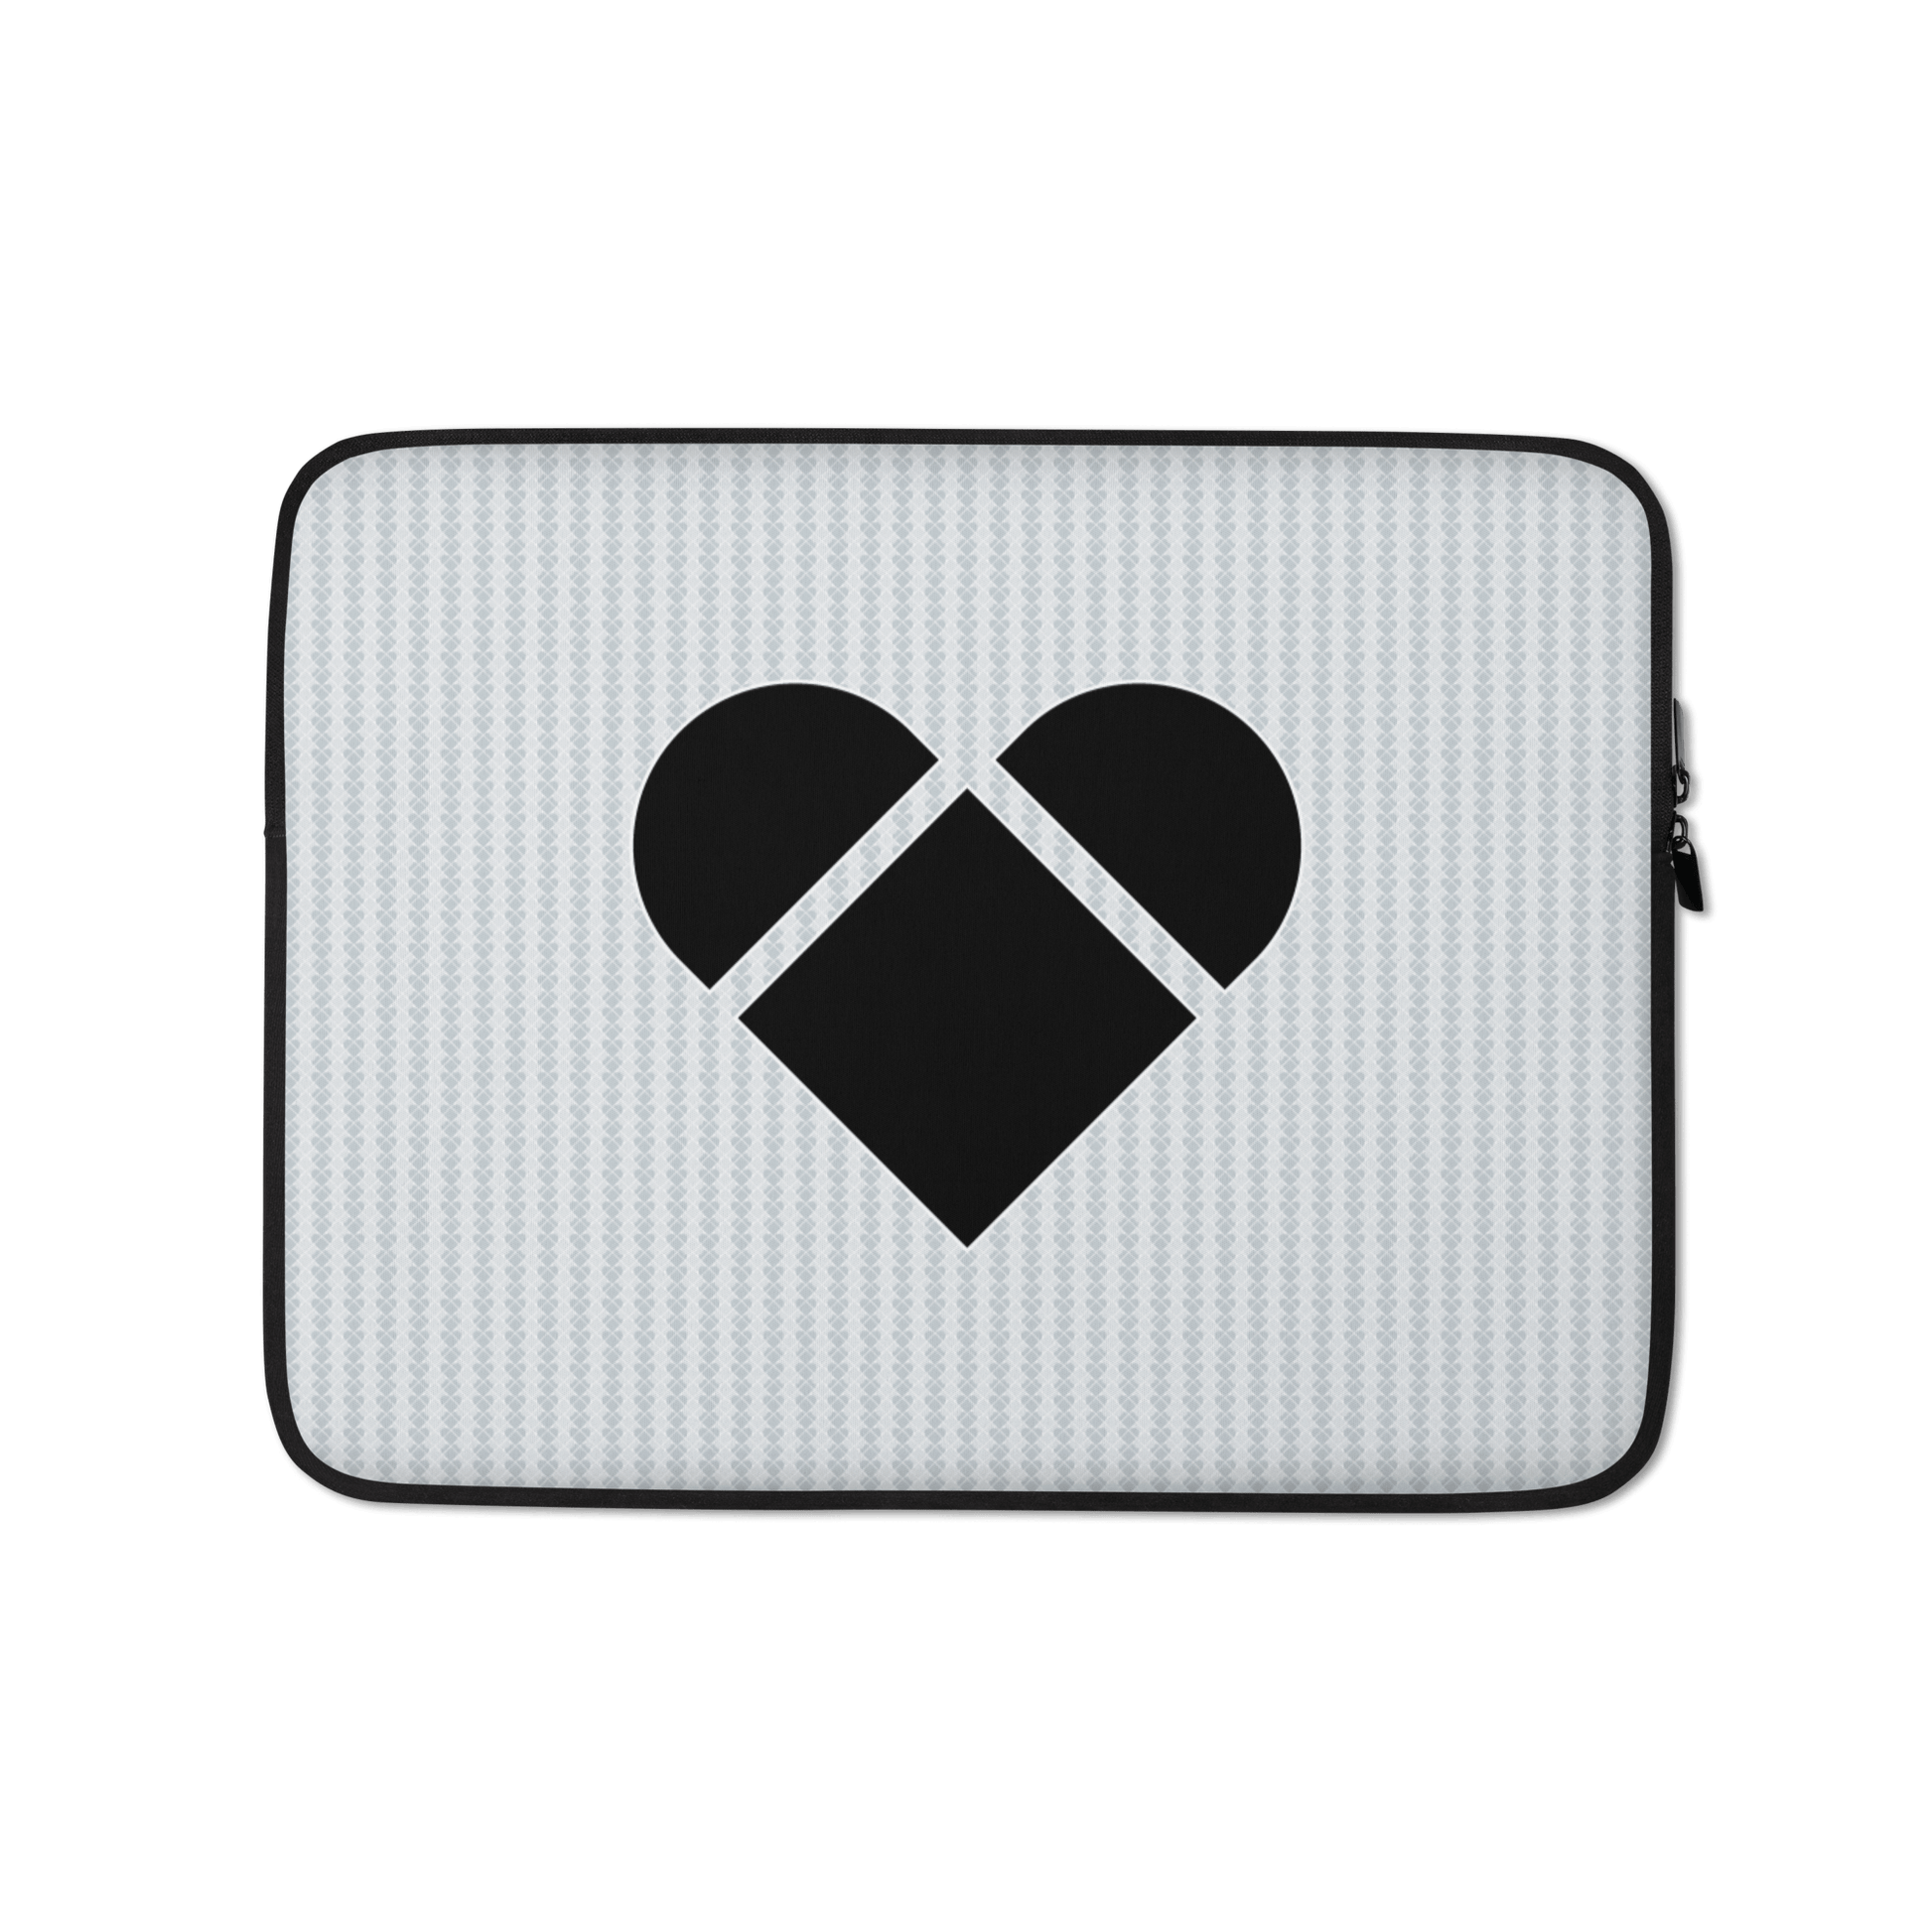 13 inch Light gray Lovogram laptop sleeve from CRiZ AMOR's Amor Primero Capsule Collection